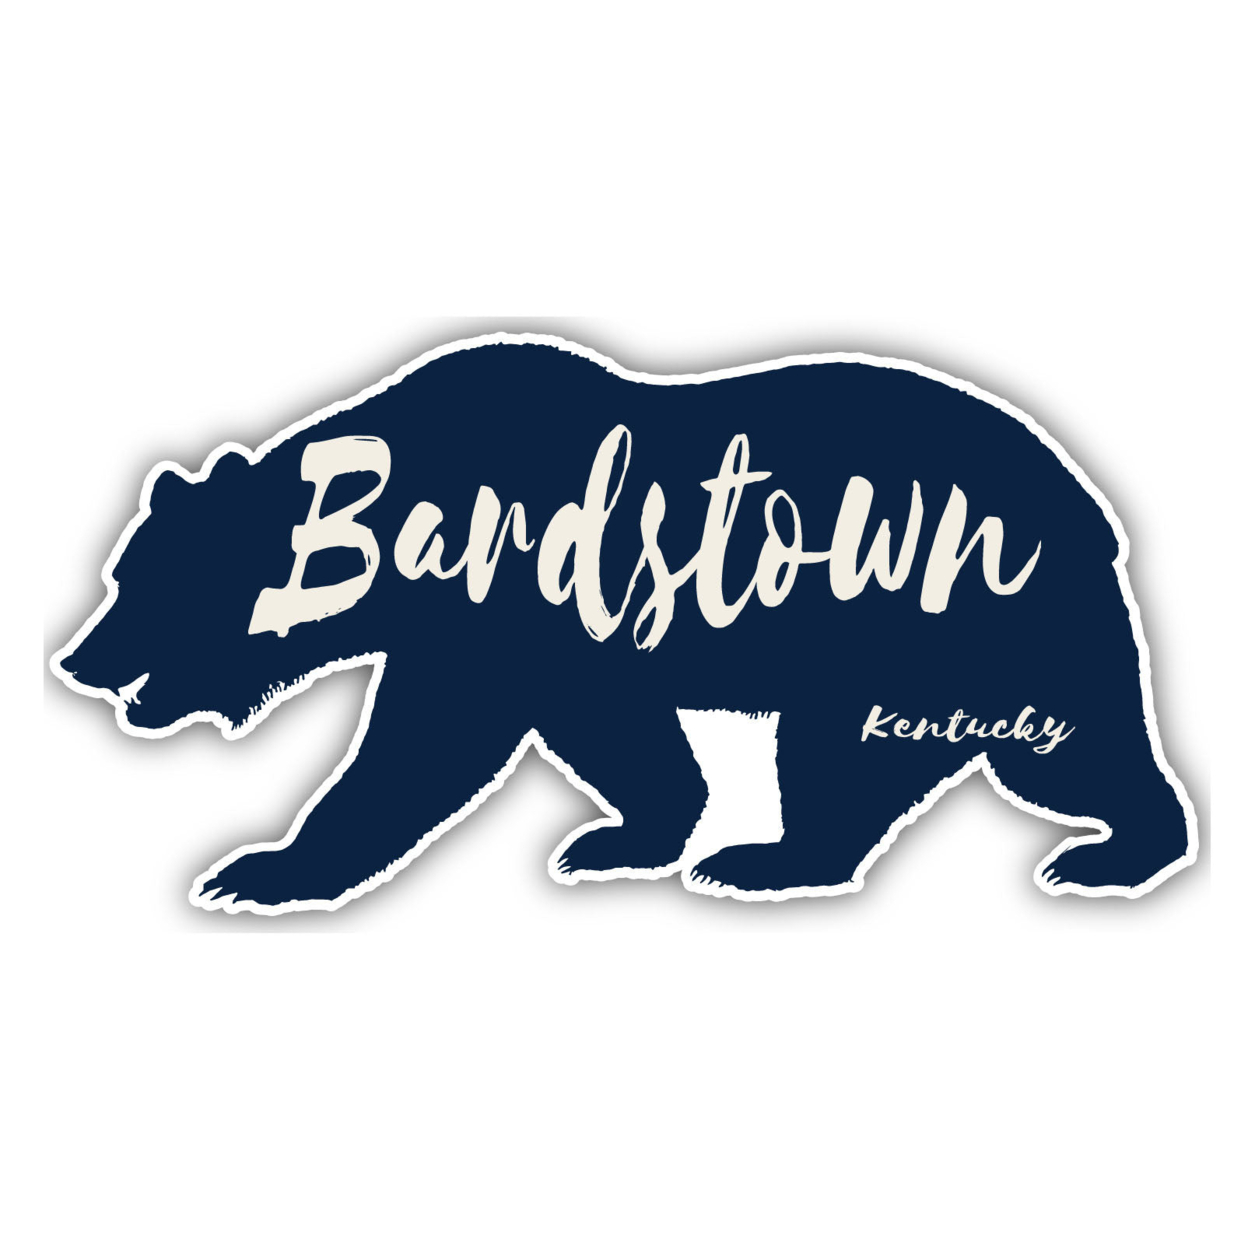 Bardstown Kentucky Souvenir Decorative Stickers (Choose Theme And Size) - Single Unit, 10-Inch, Bear